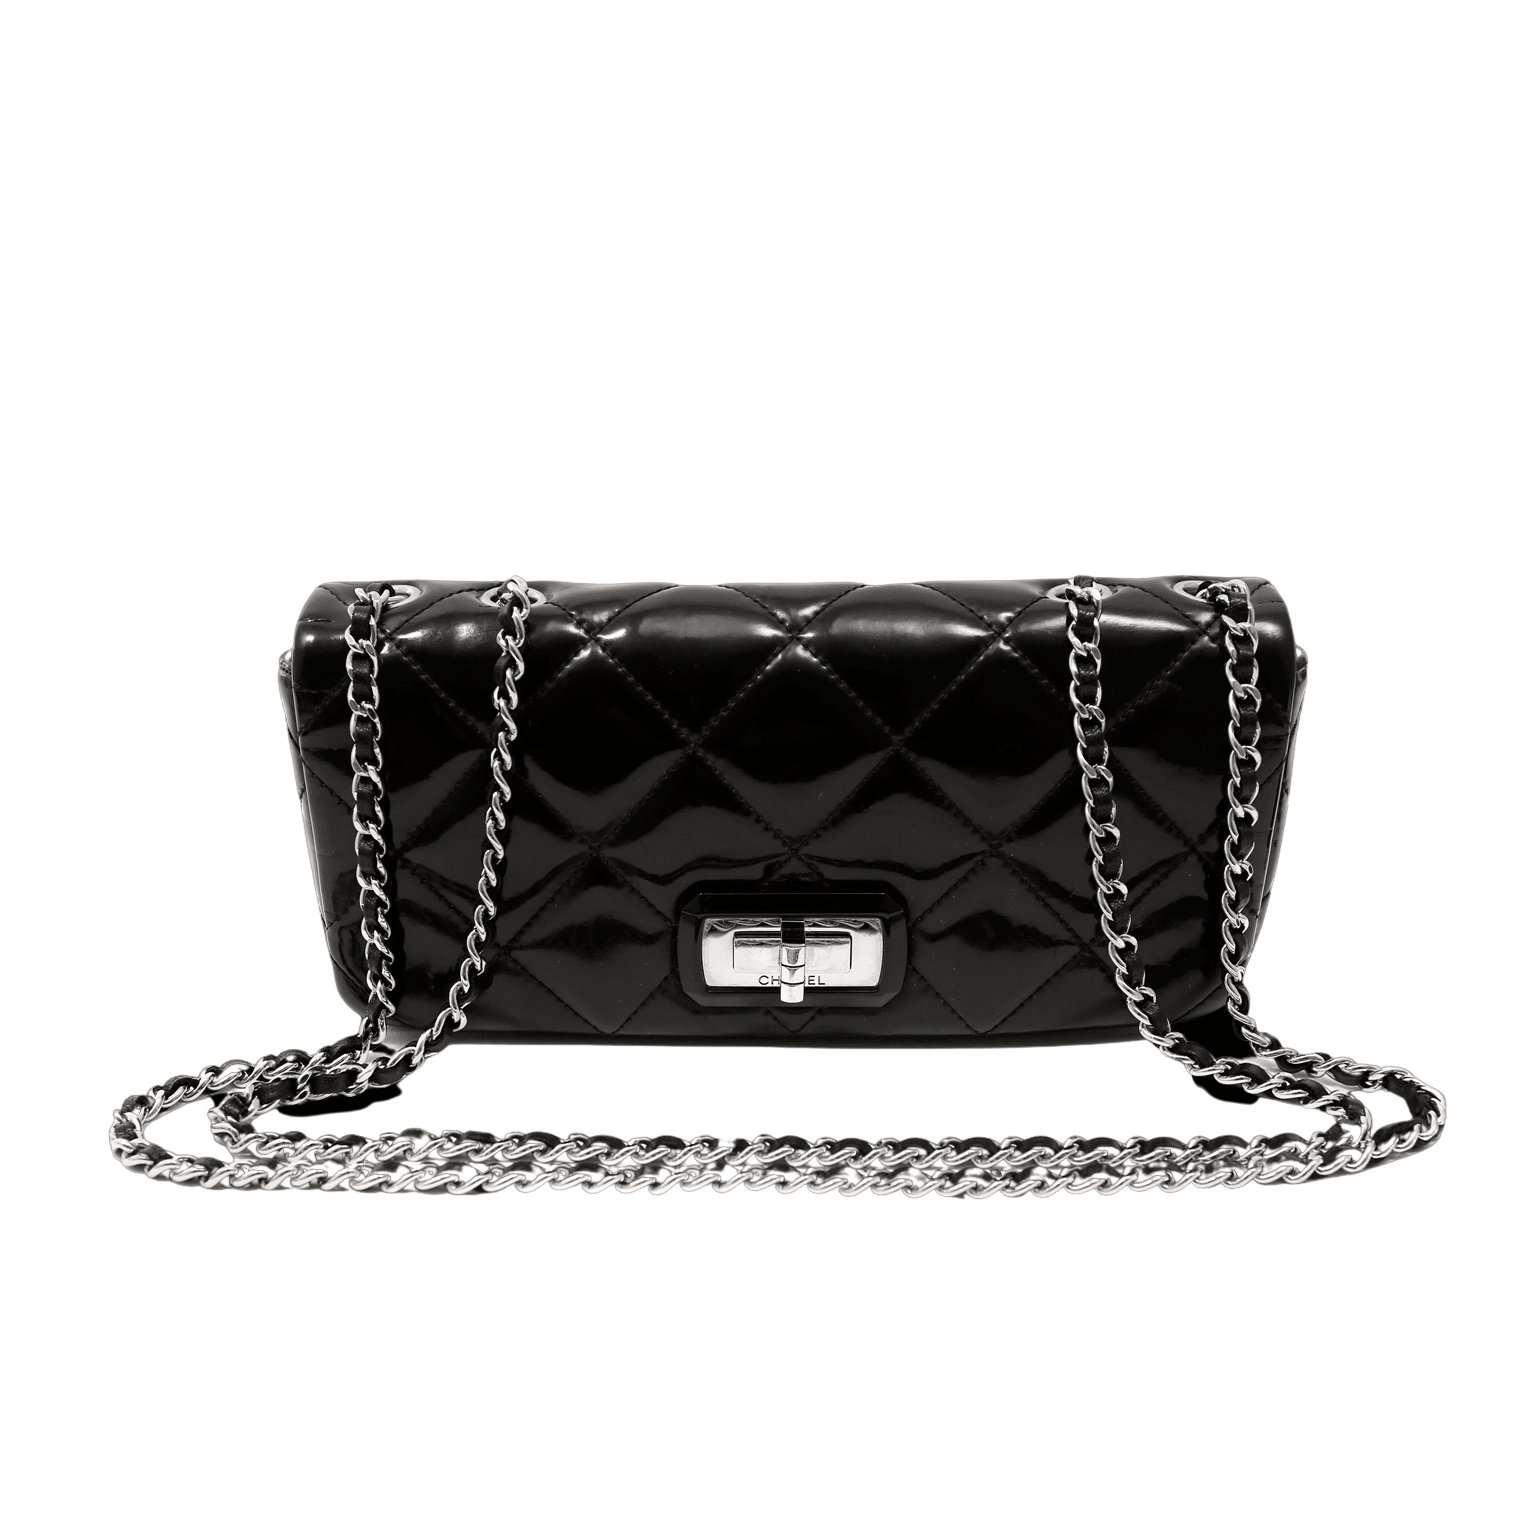 chanel black patent leather purse handbag